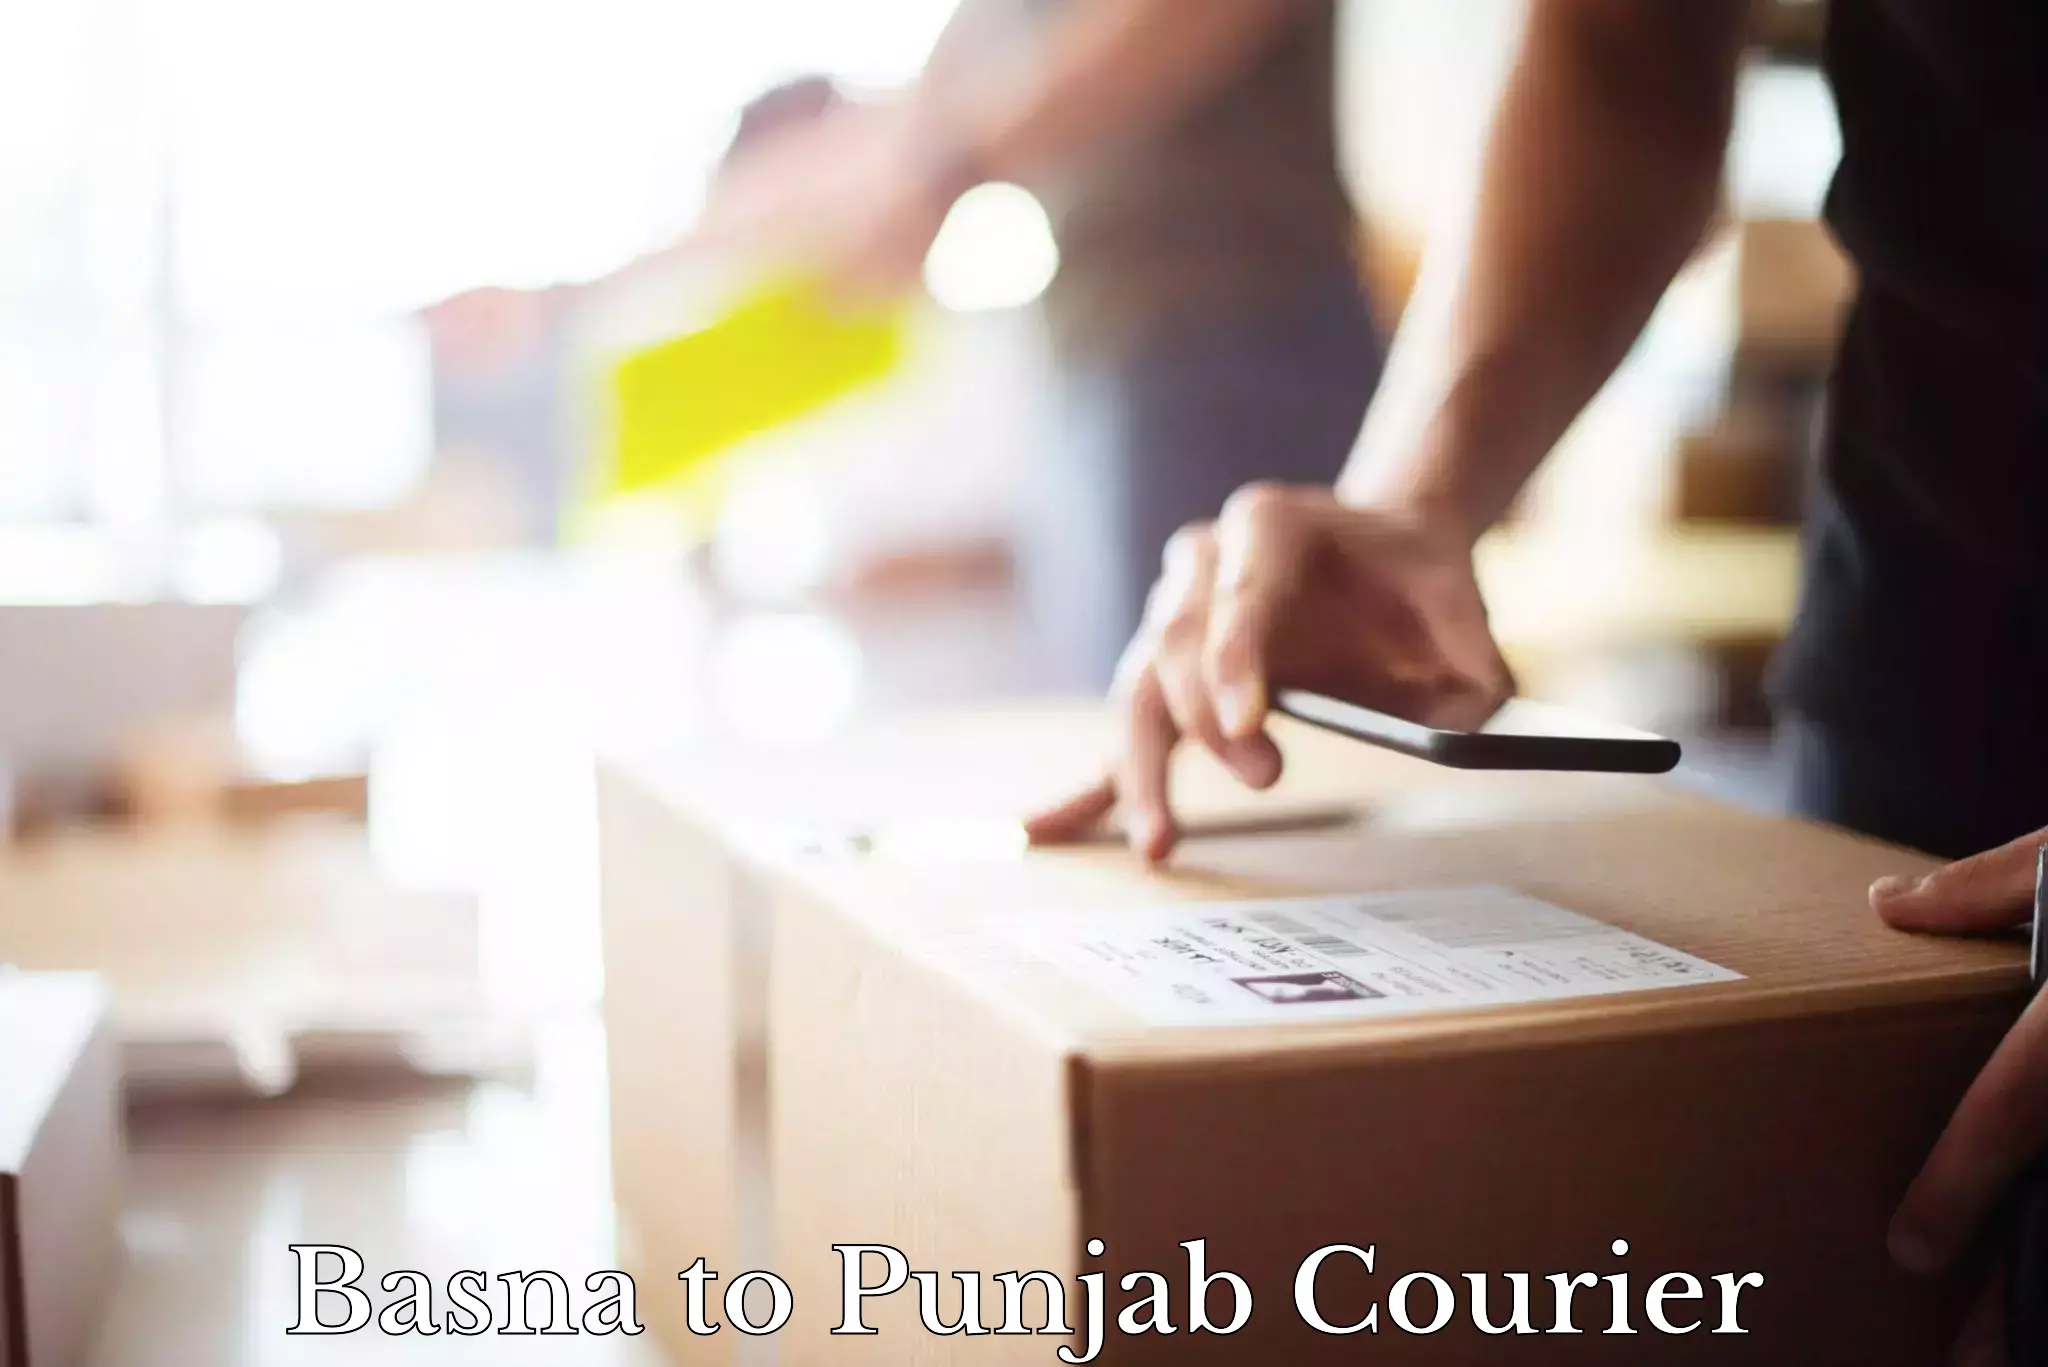 Courier service partnerships Basna to Punjab